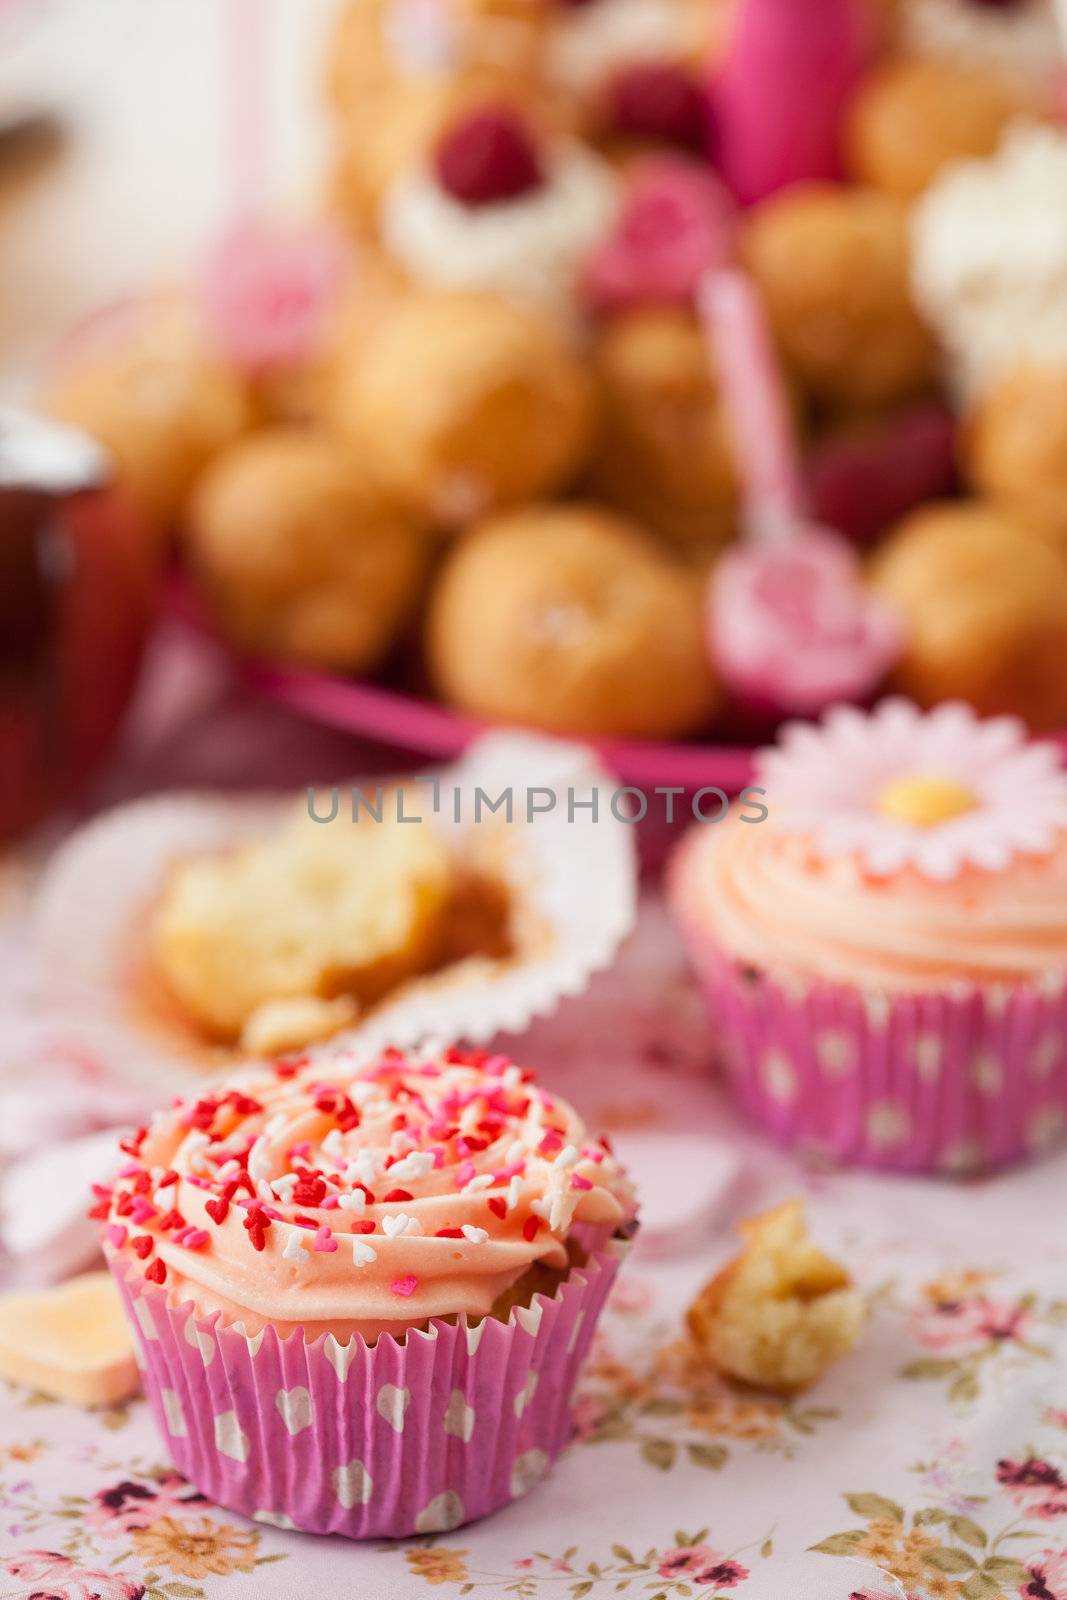 Birthday cupcake with sprinkles by Fotosmurf